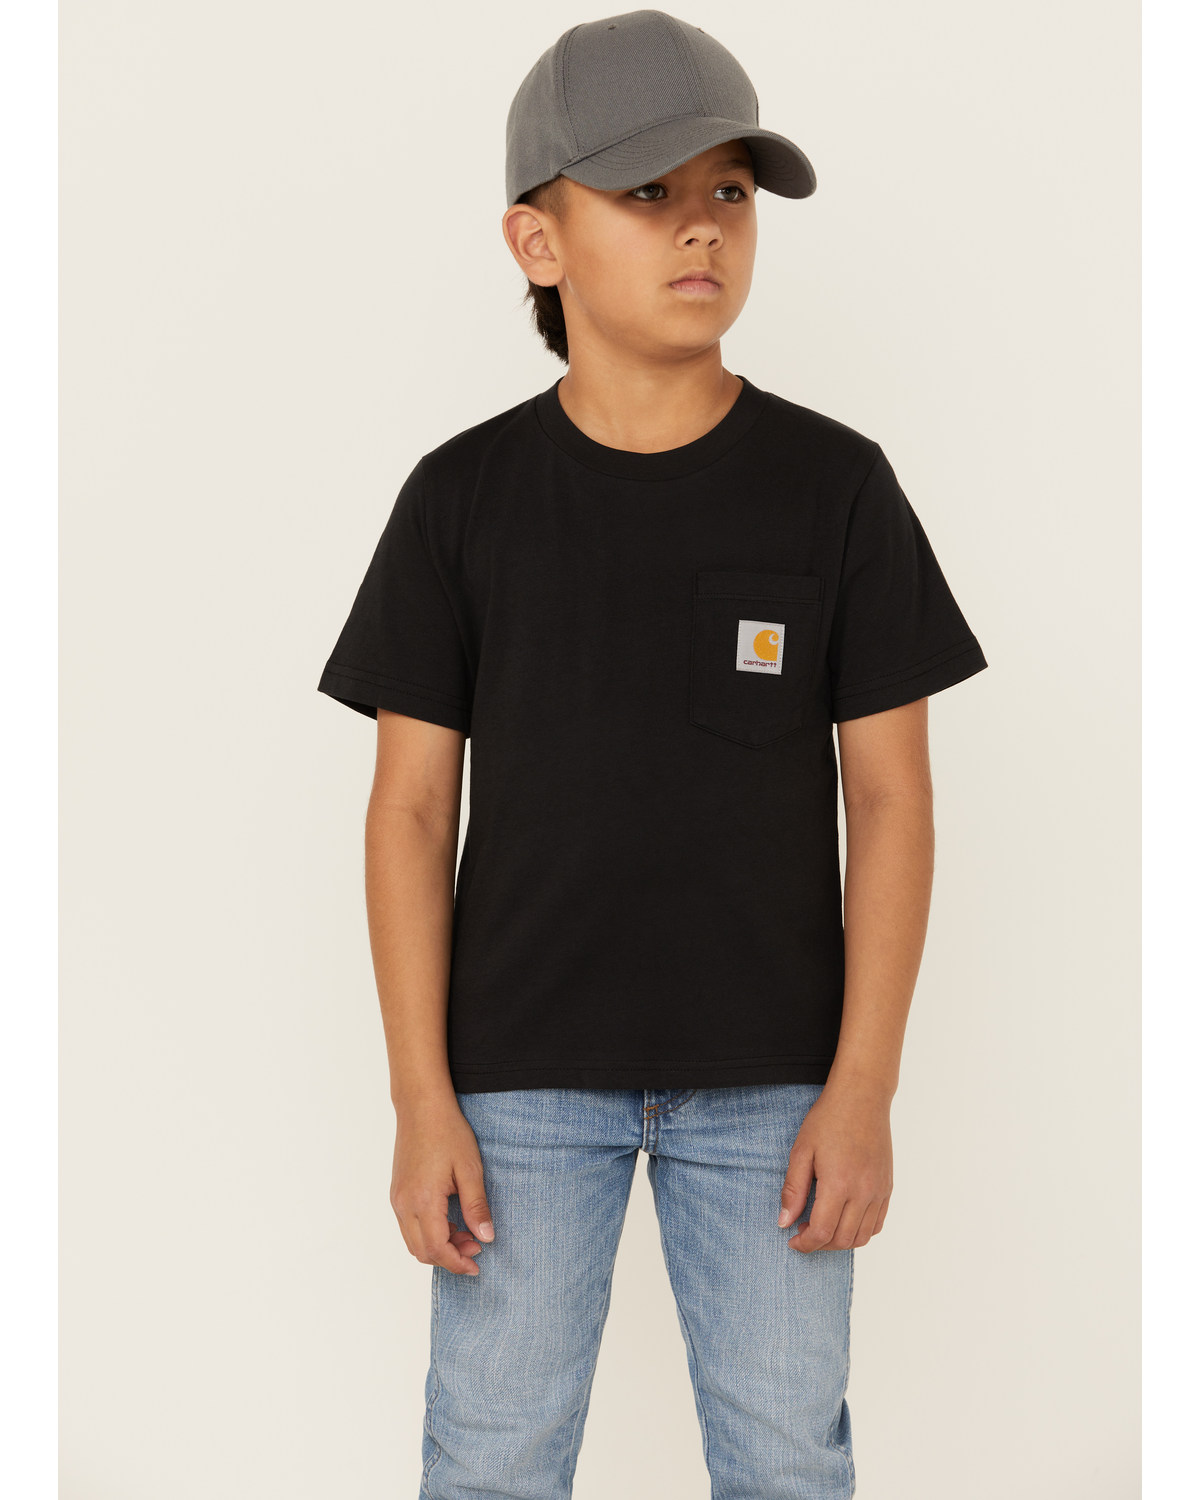 Carhartt Little Boys' Solid Short Sleeve Pocket T-Shirt